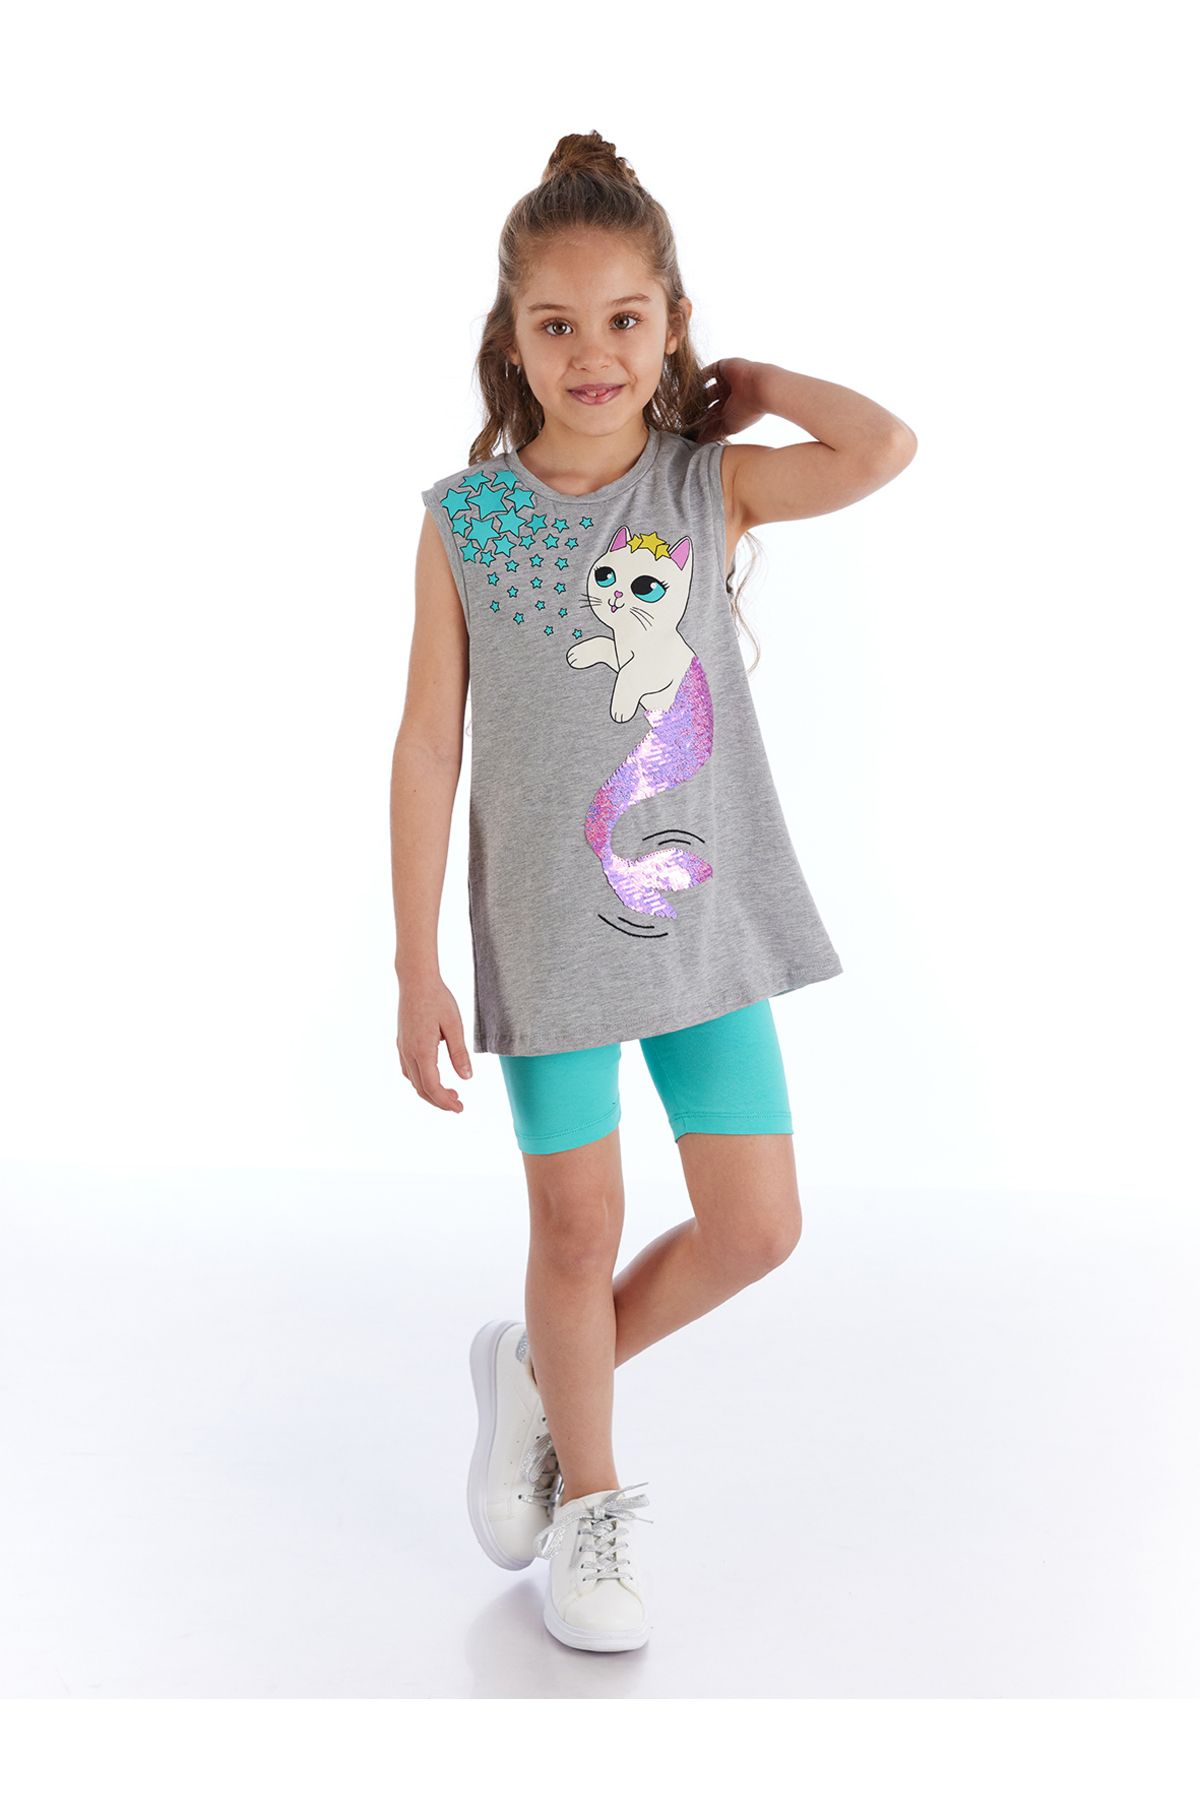 MSHB&G Pullu Kedi Kız Çocuk T-shirt Tayt Takım